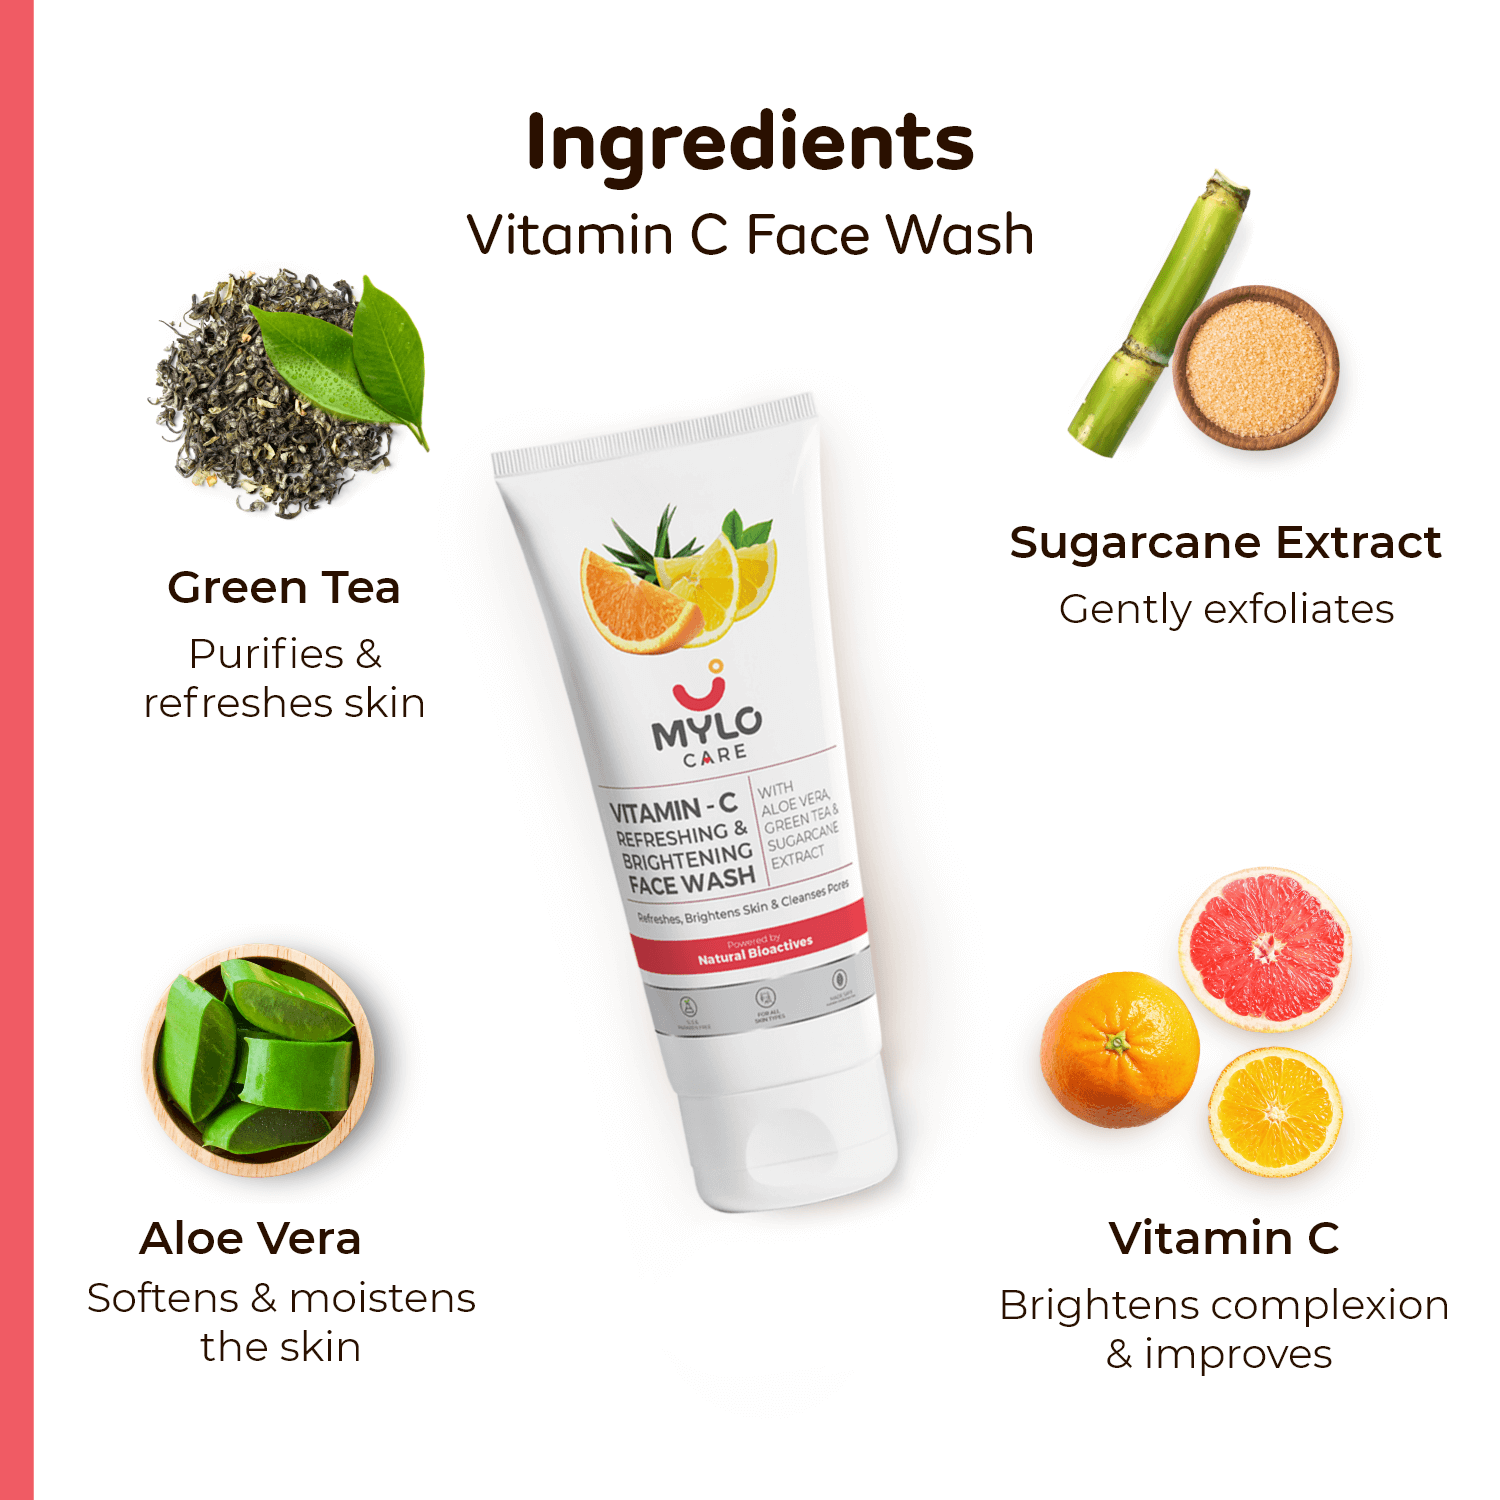 Mylo Daily Skin Care Routine Vitamin C Gift Set - Face Wash (100 ml), Skin Toner (200 ml) & Moisturizer (100 gm)